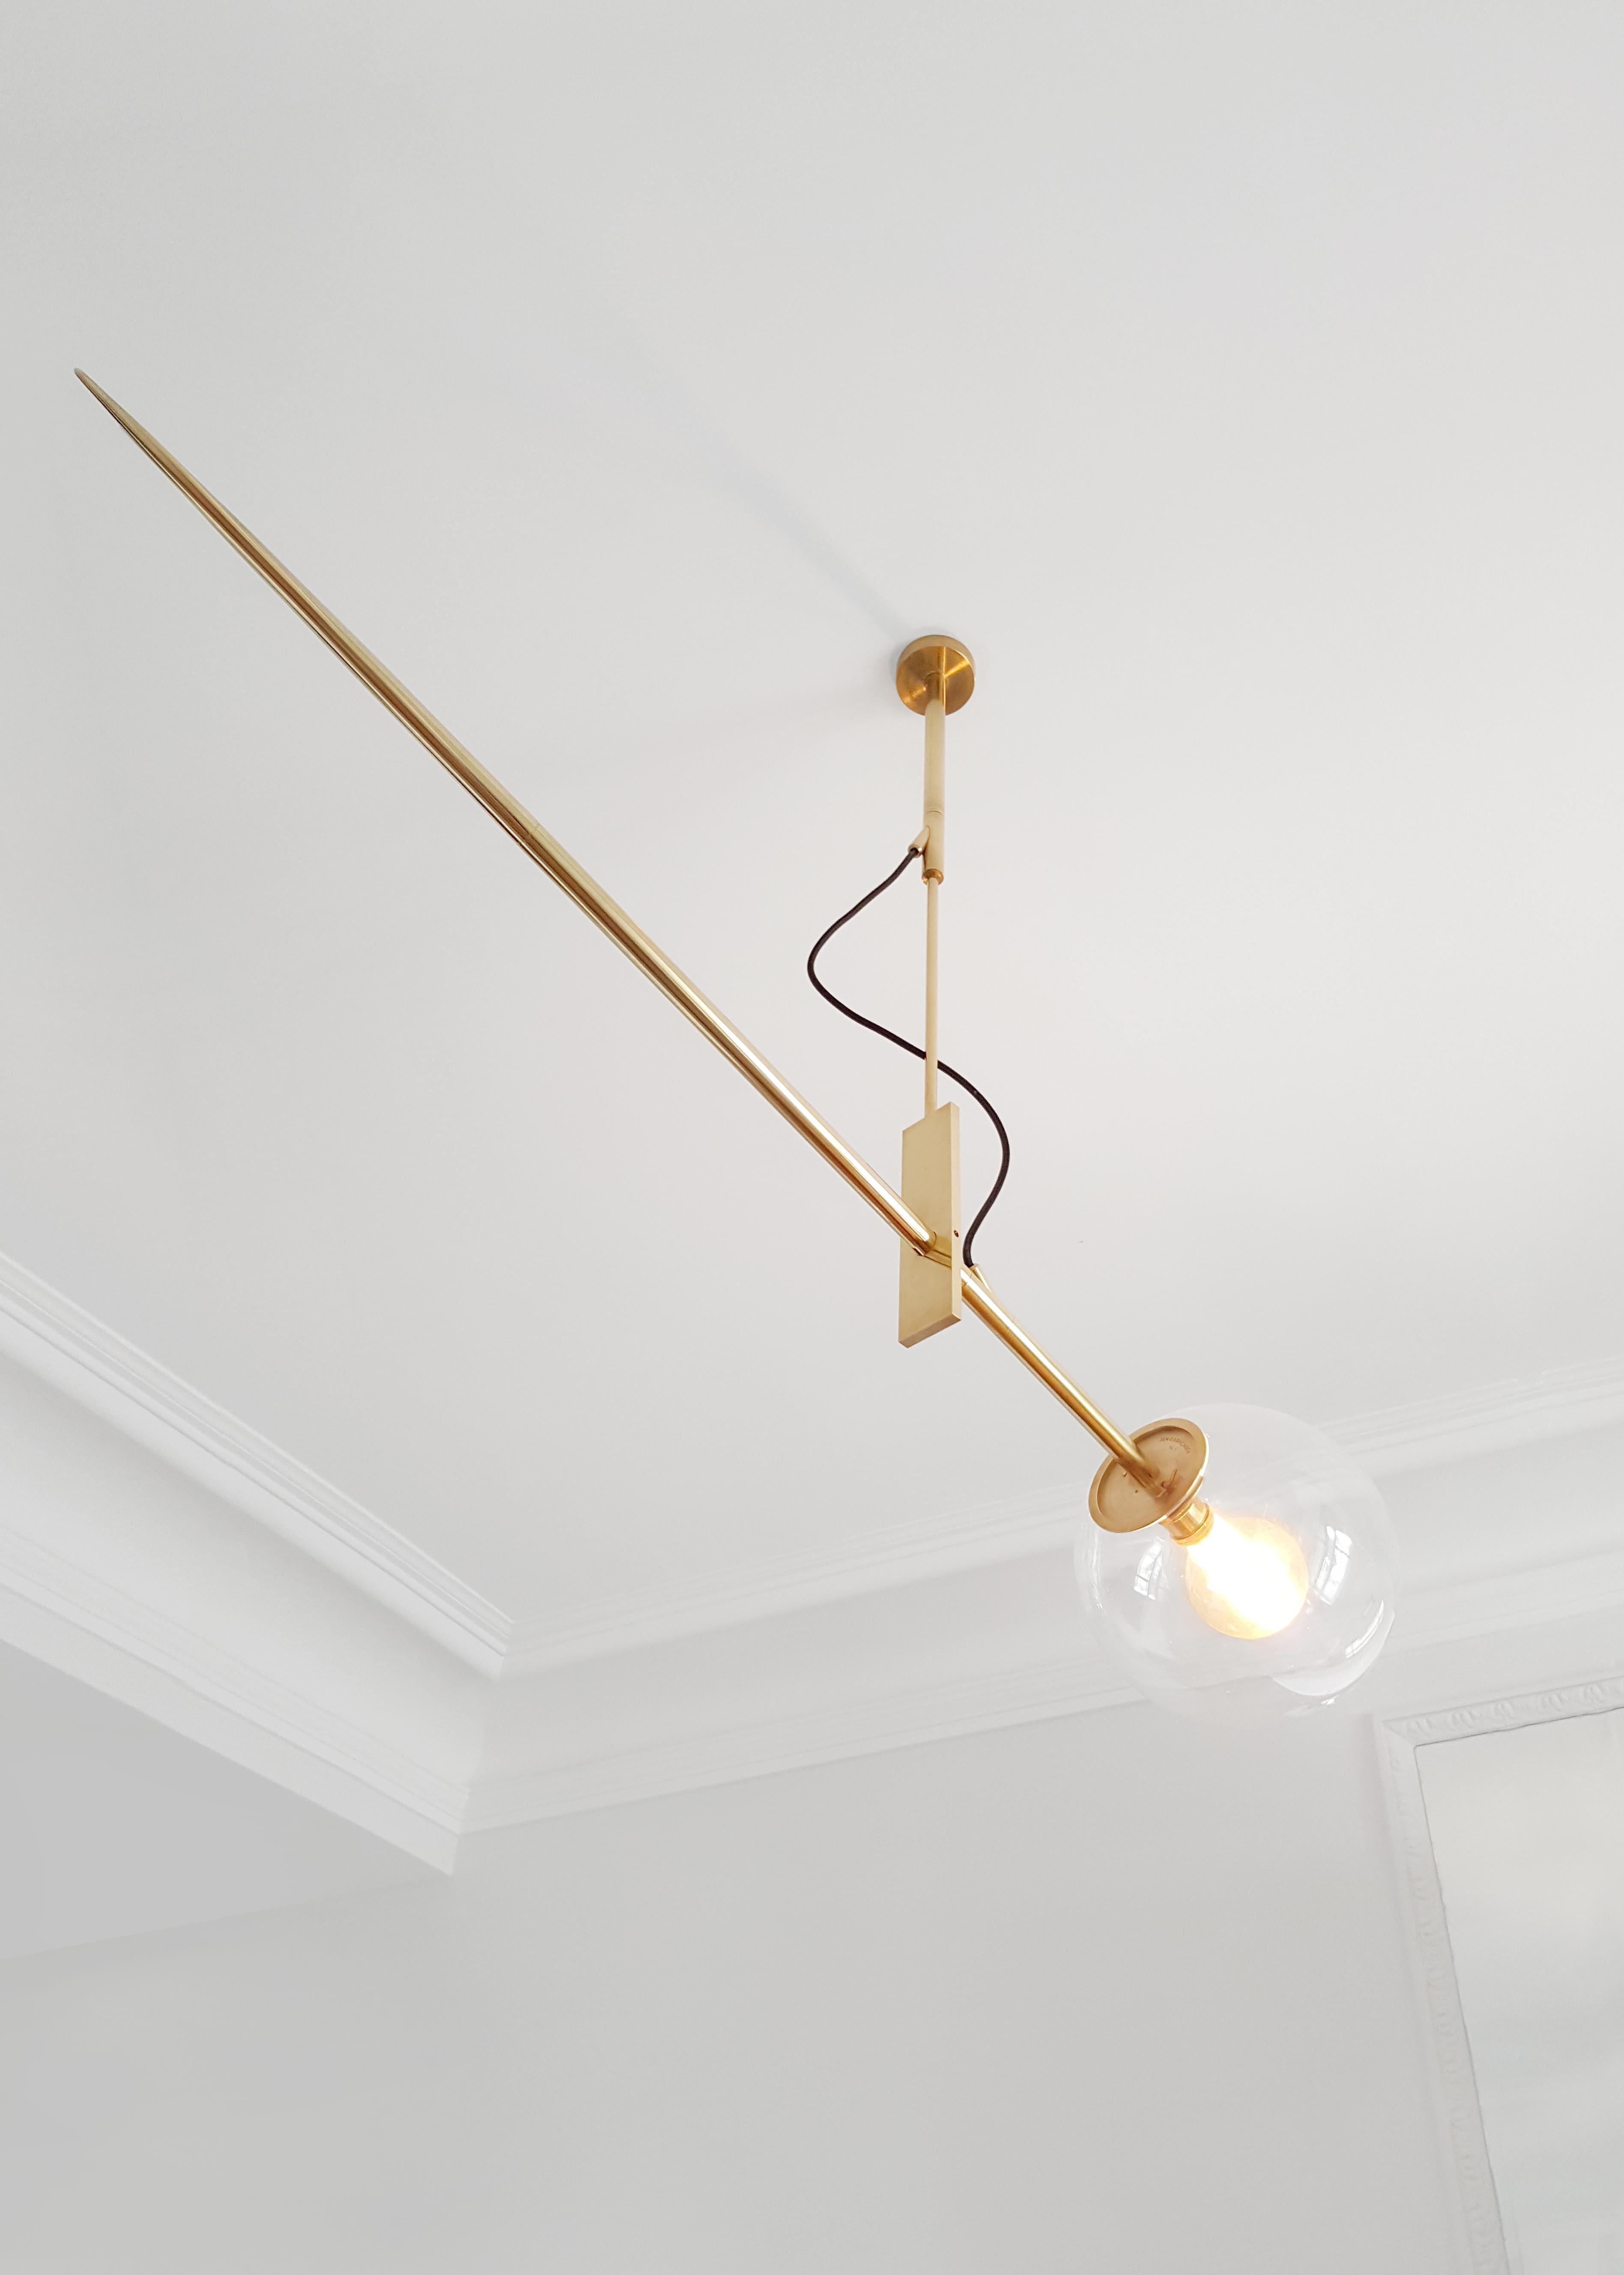 Pair of Hasta Brass Hanging Lamps, Jan Garncarek For Sale 2